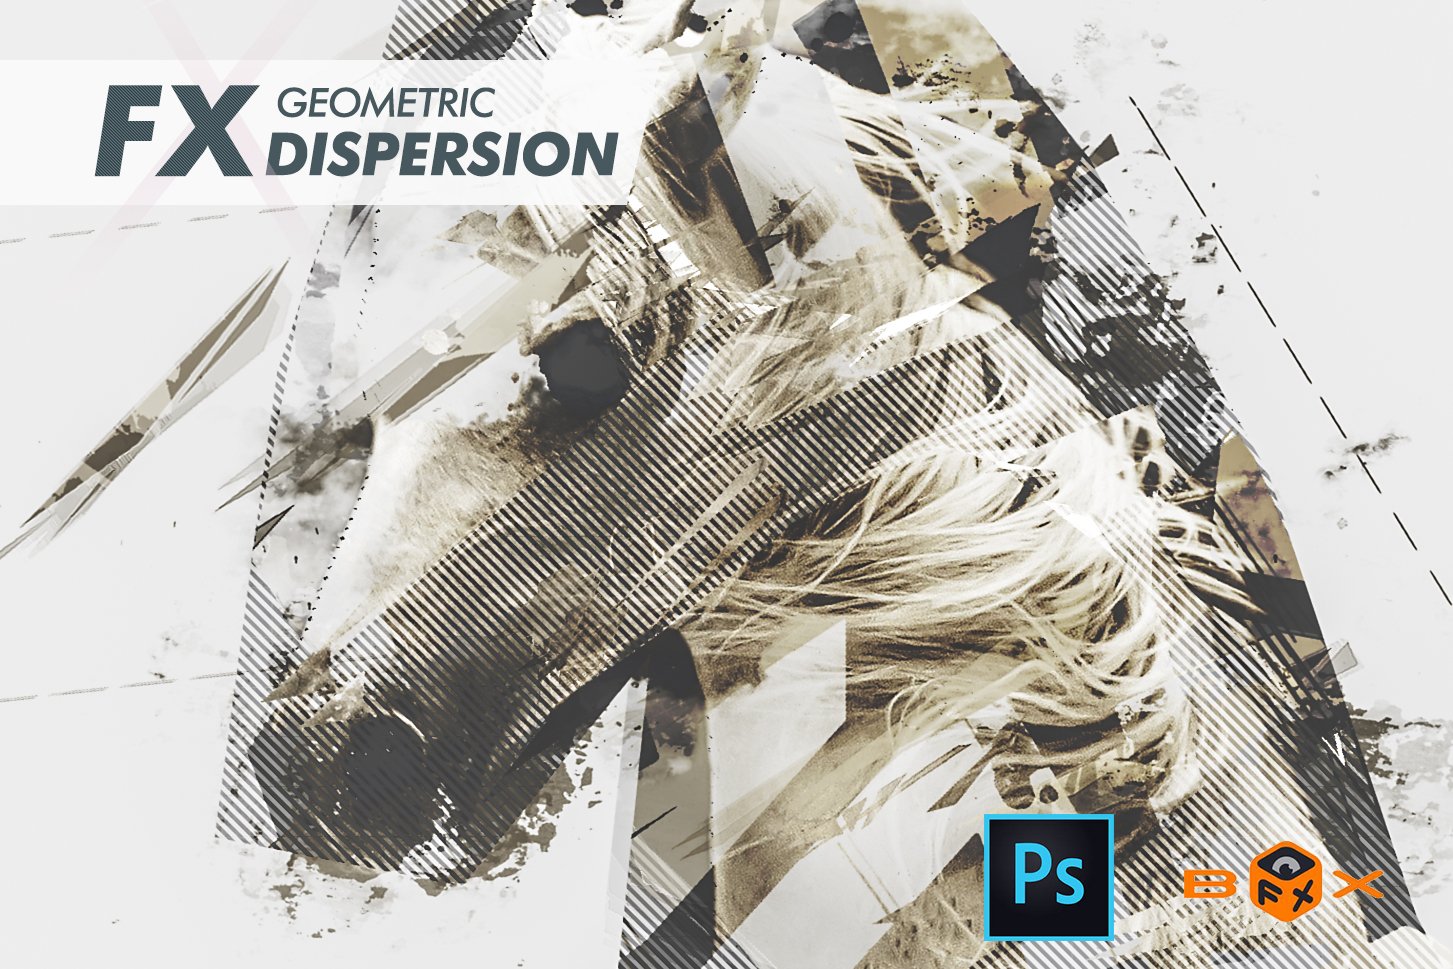 Geometric Dispersion FX - PS Plugincover image.